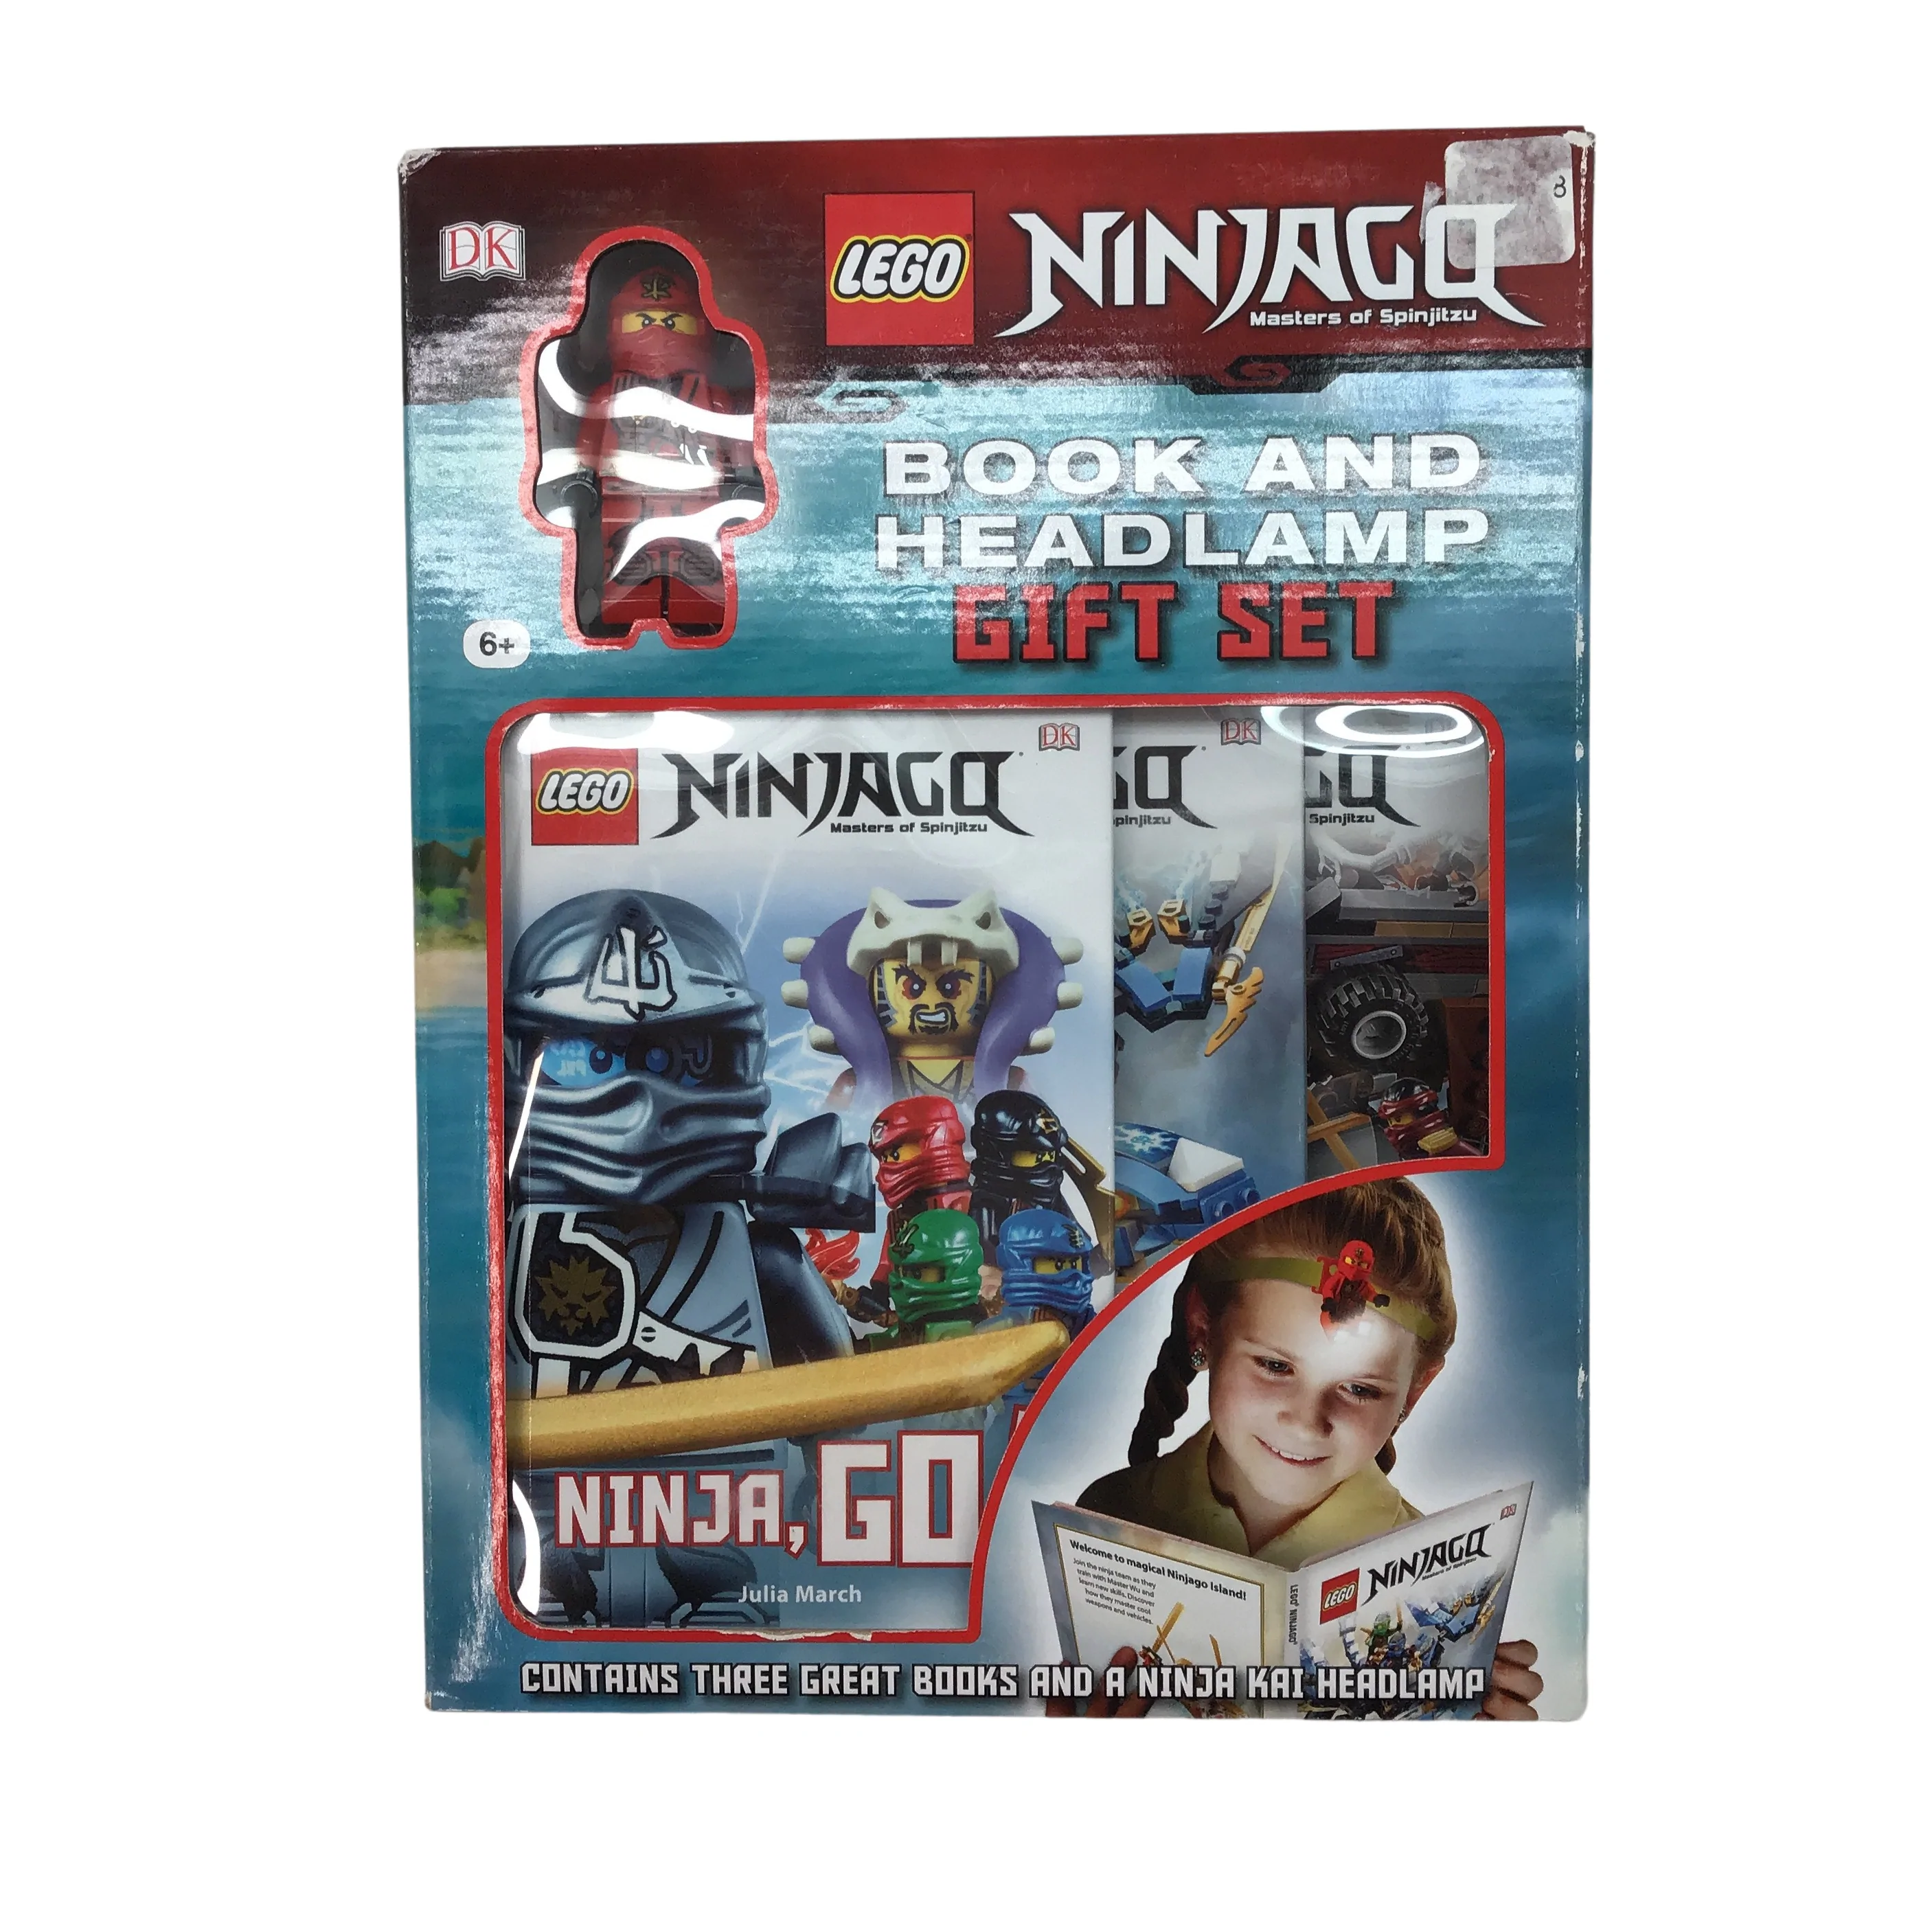 Lego: Ninjago Master of spinjitzu / Book and Headlamp Gift Set / 3 Books / Ages 6+